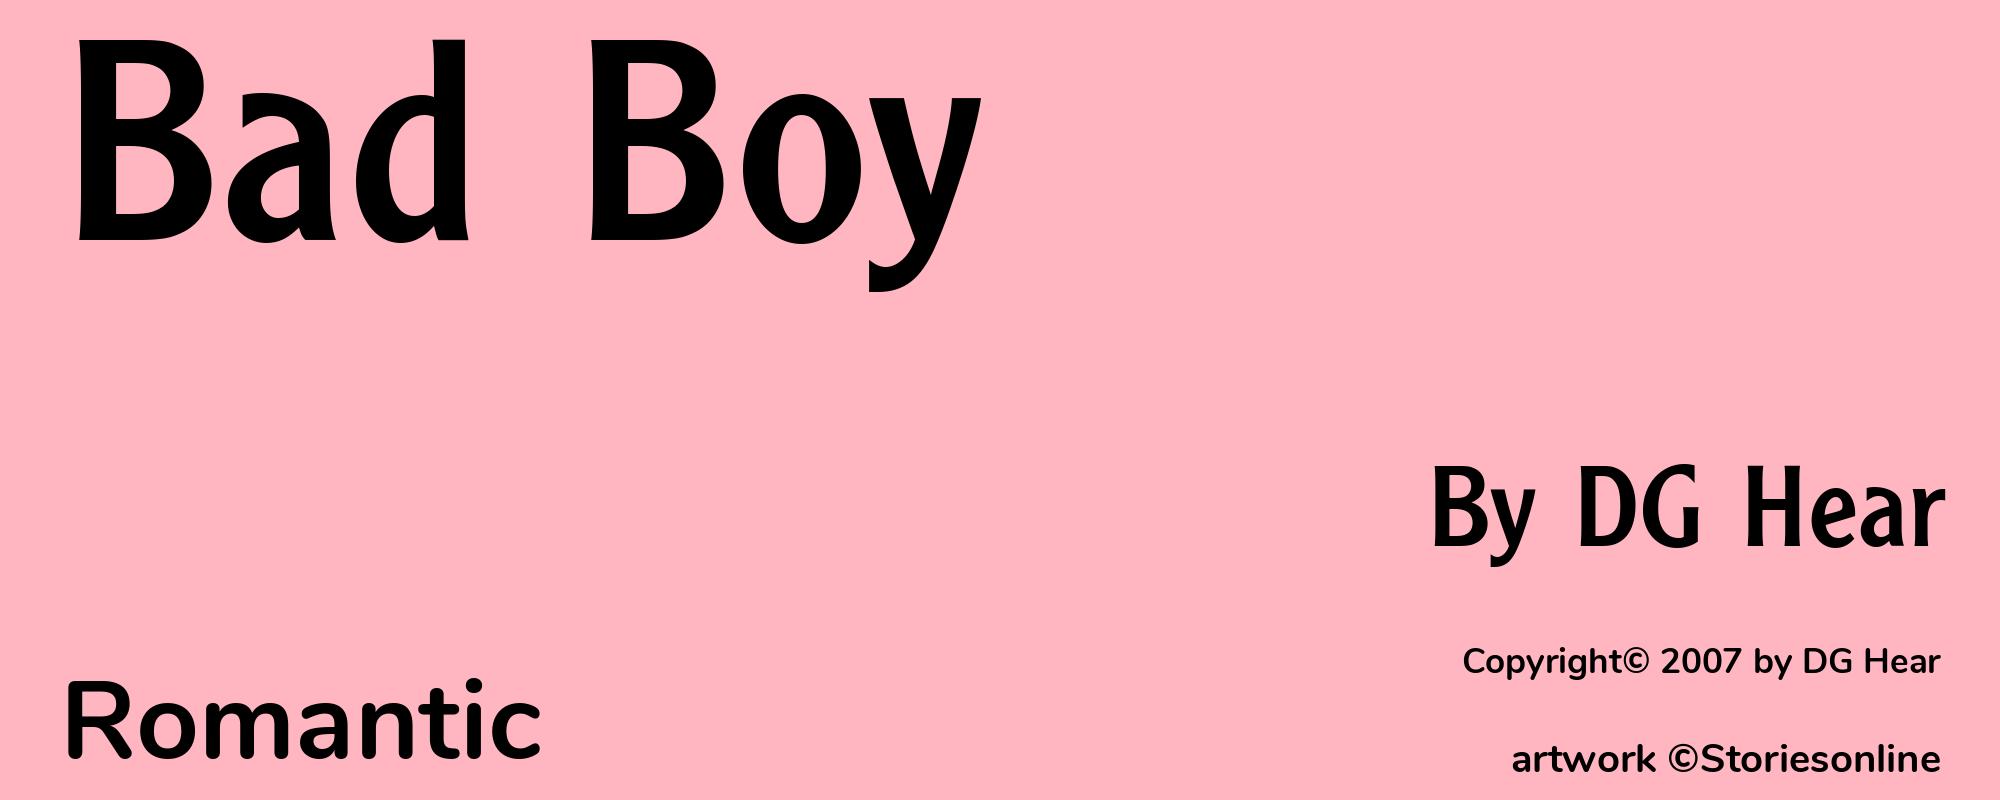 Bad Boy - Cover